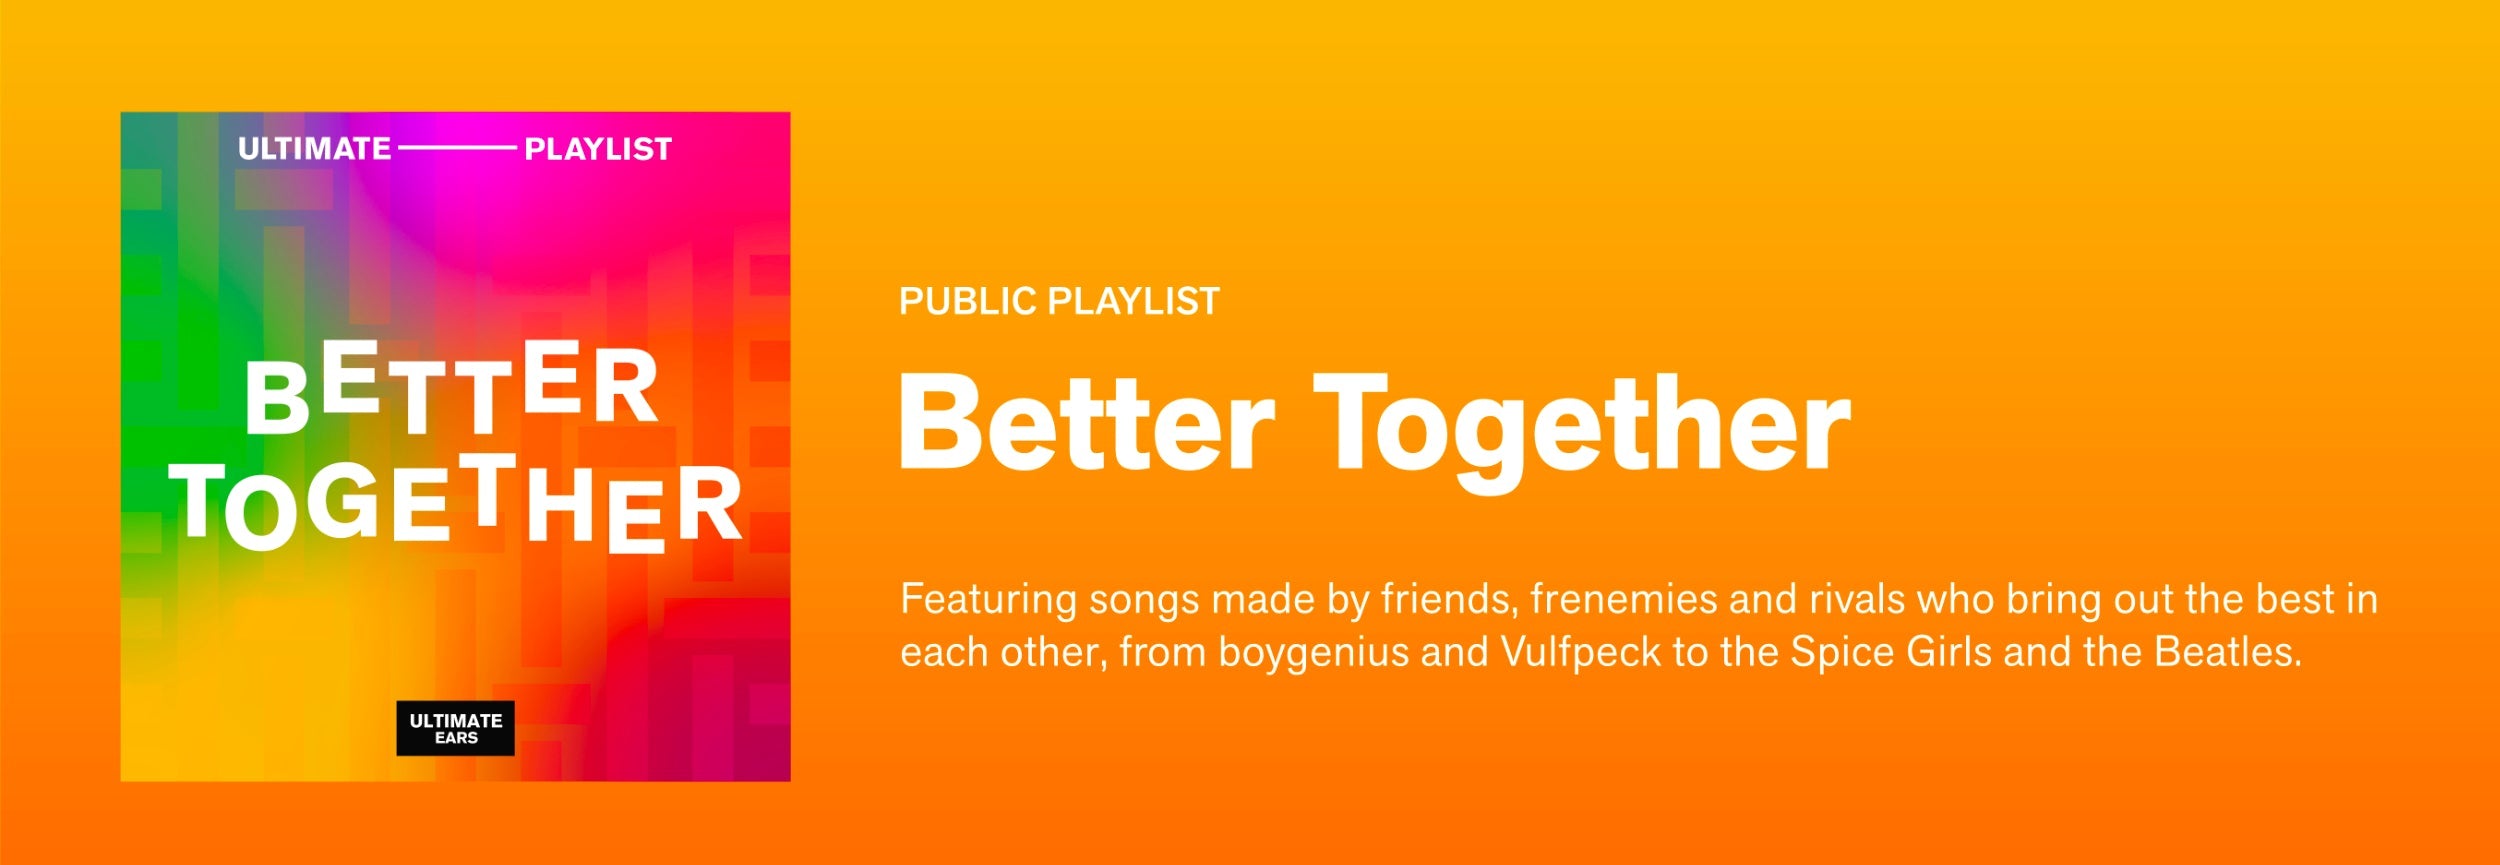 Playlist: Better Together